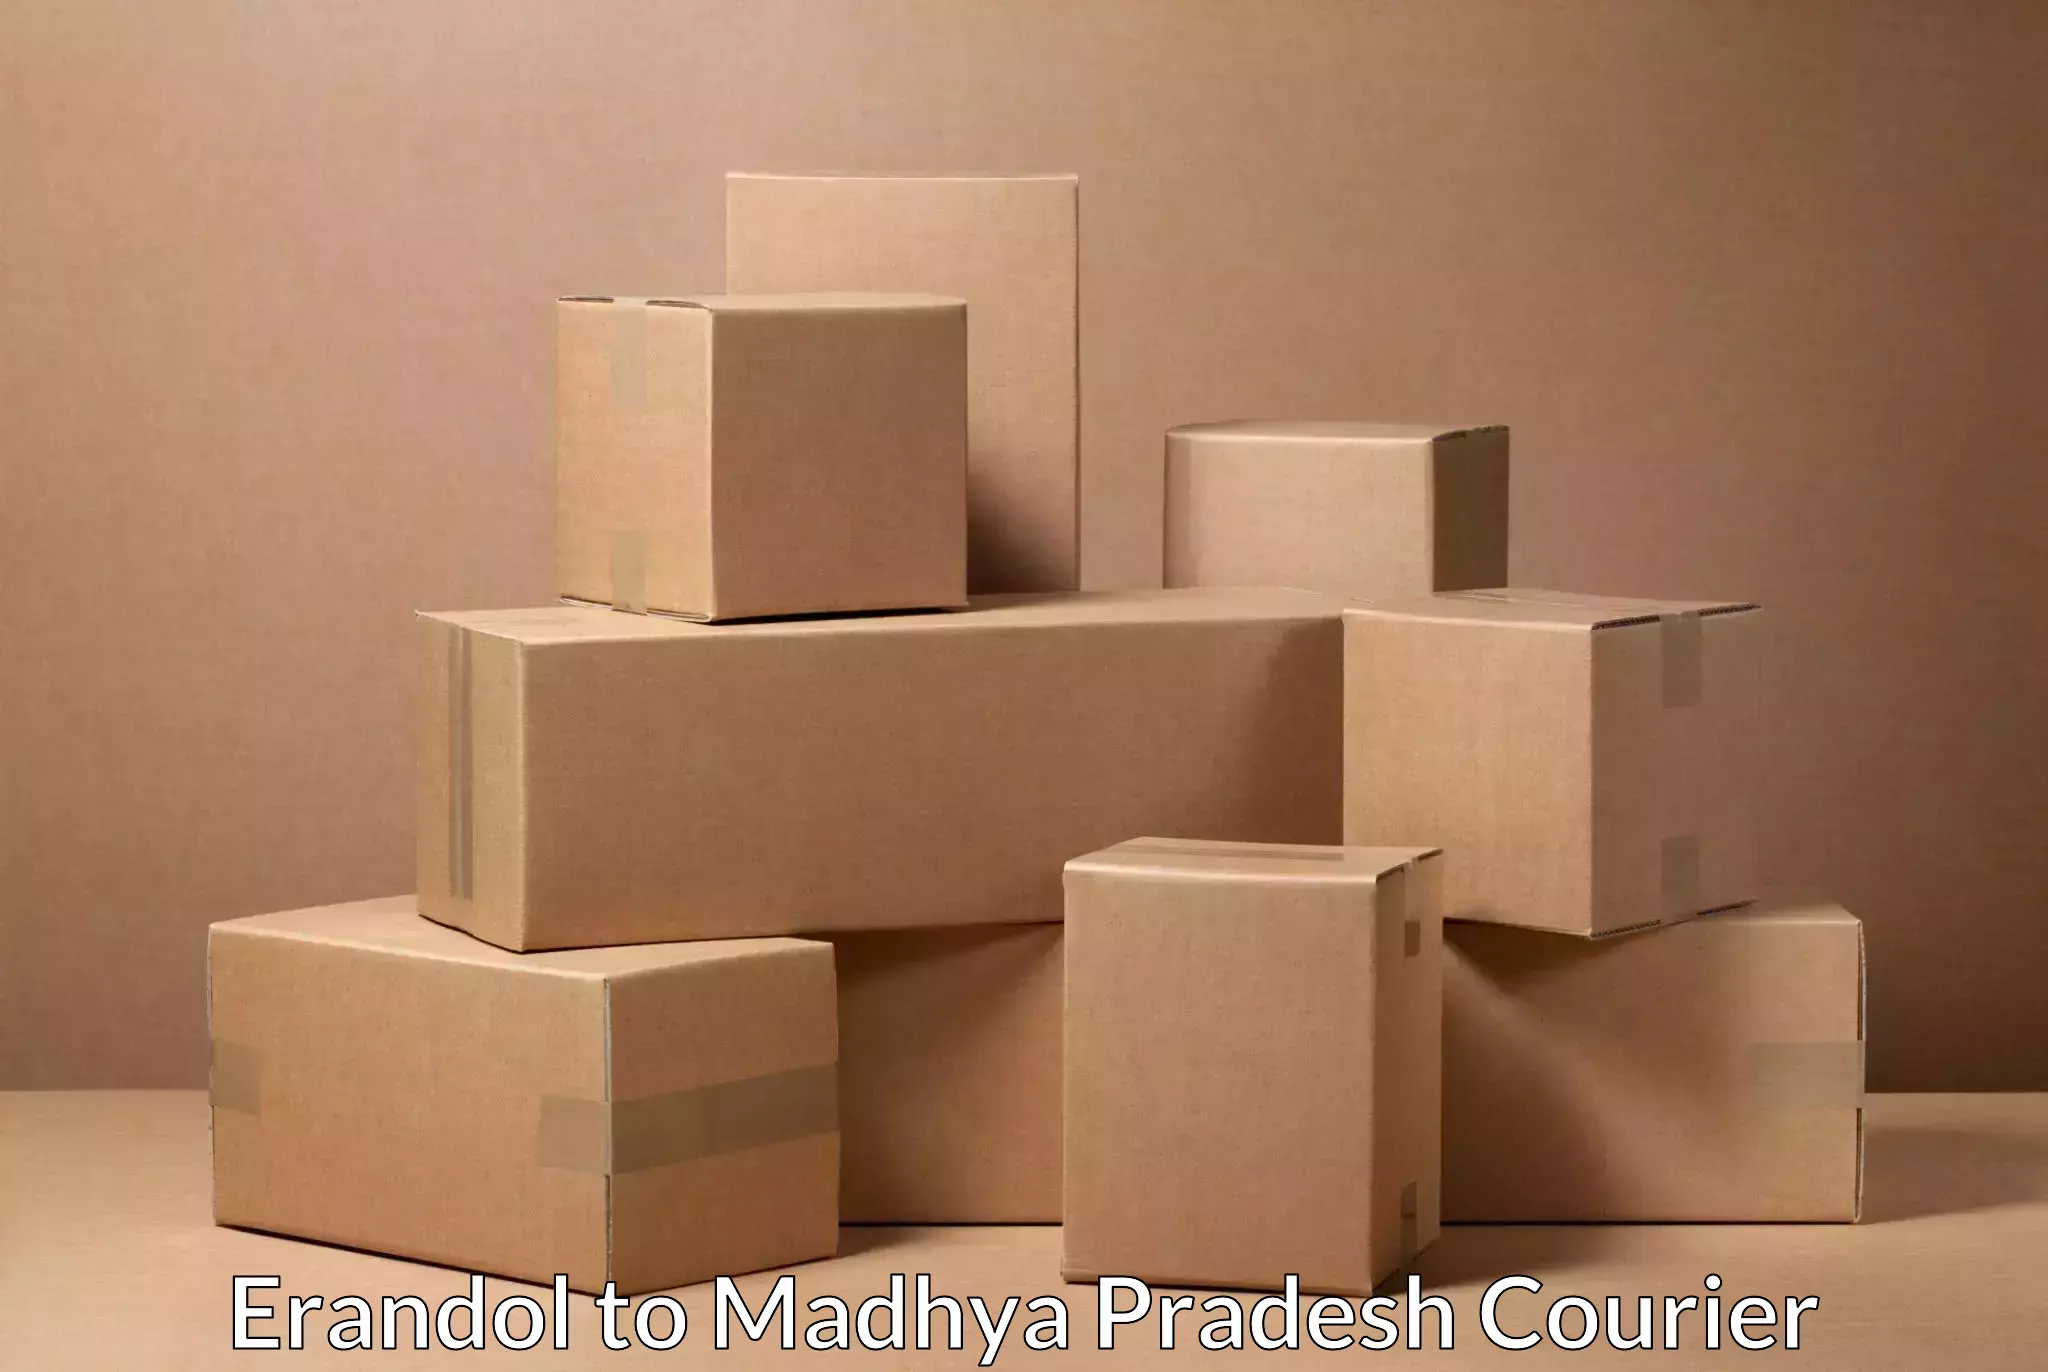 Multi-service courier options Erandol to Madhya Pradesh